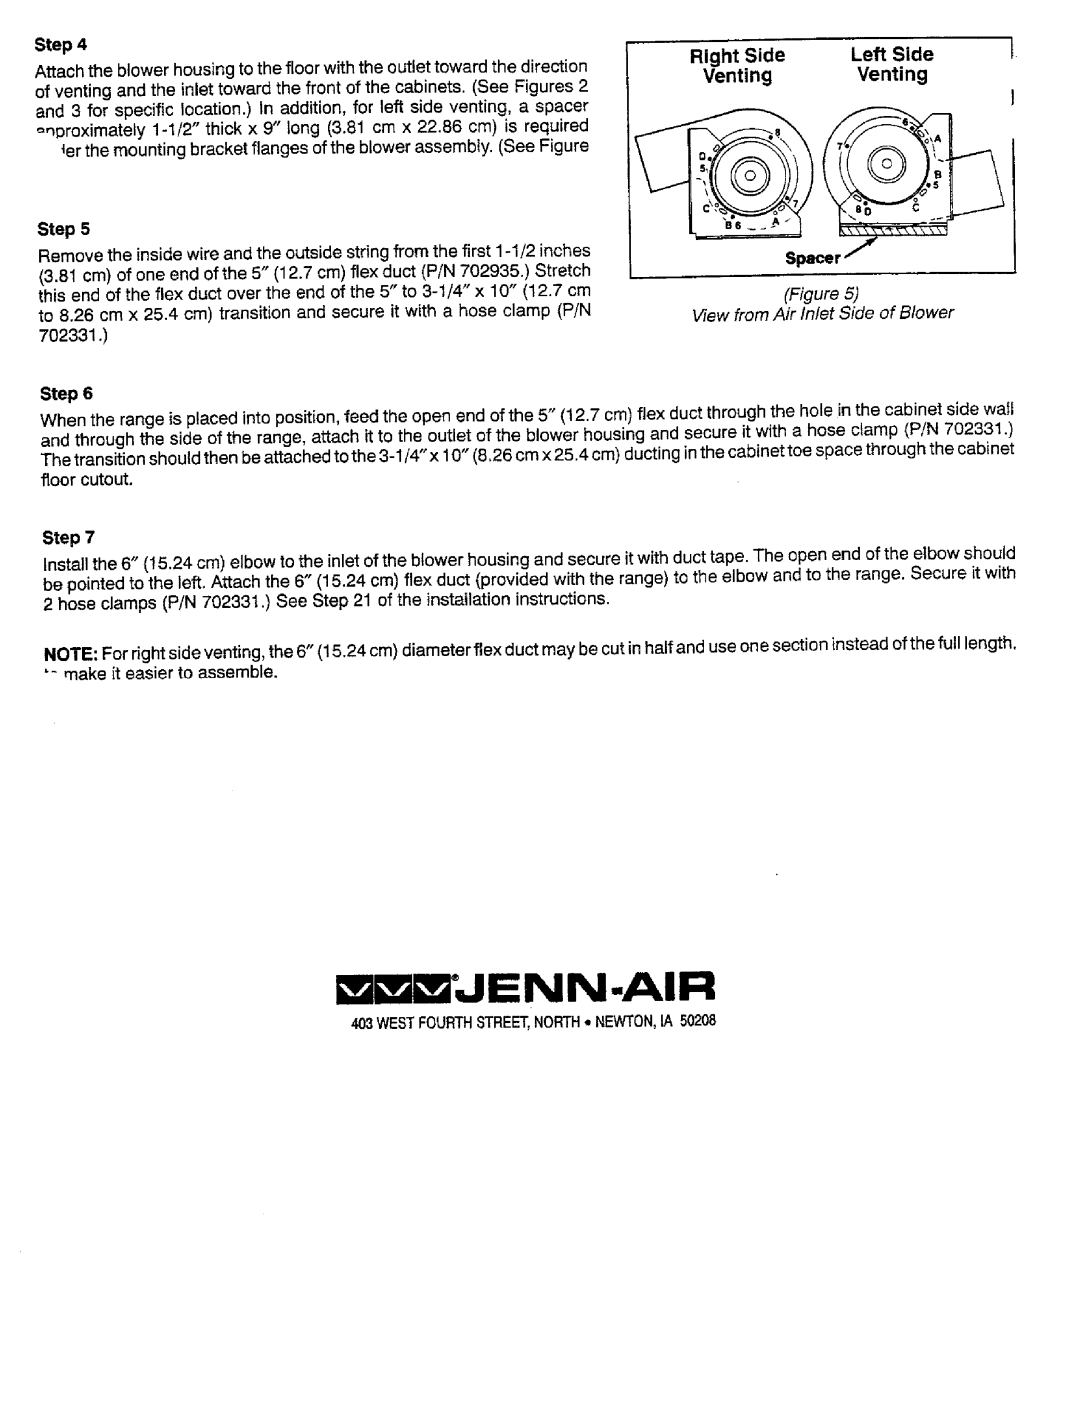 Jenn-Air SCE30600, SVE47100, SCE30500 dimensions Jenn-Air, Step, Right Side, Left Side, Spacer 